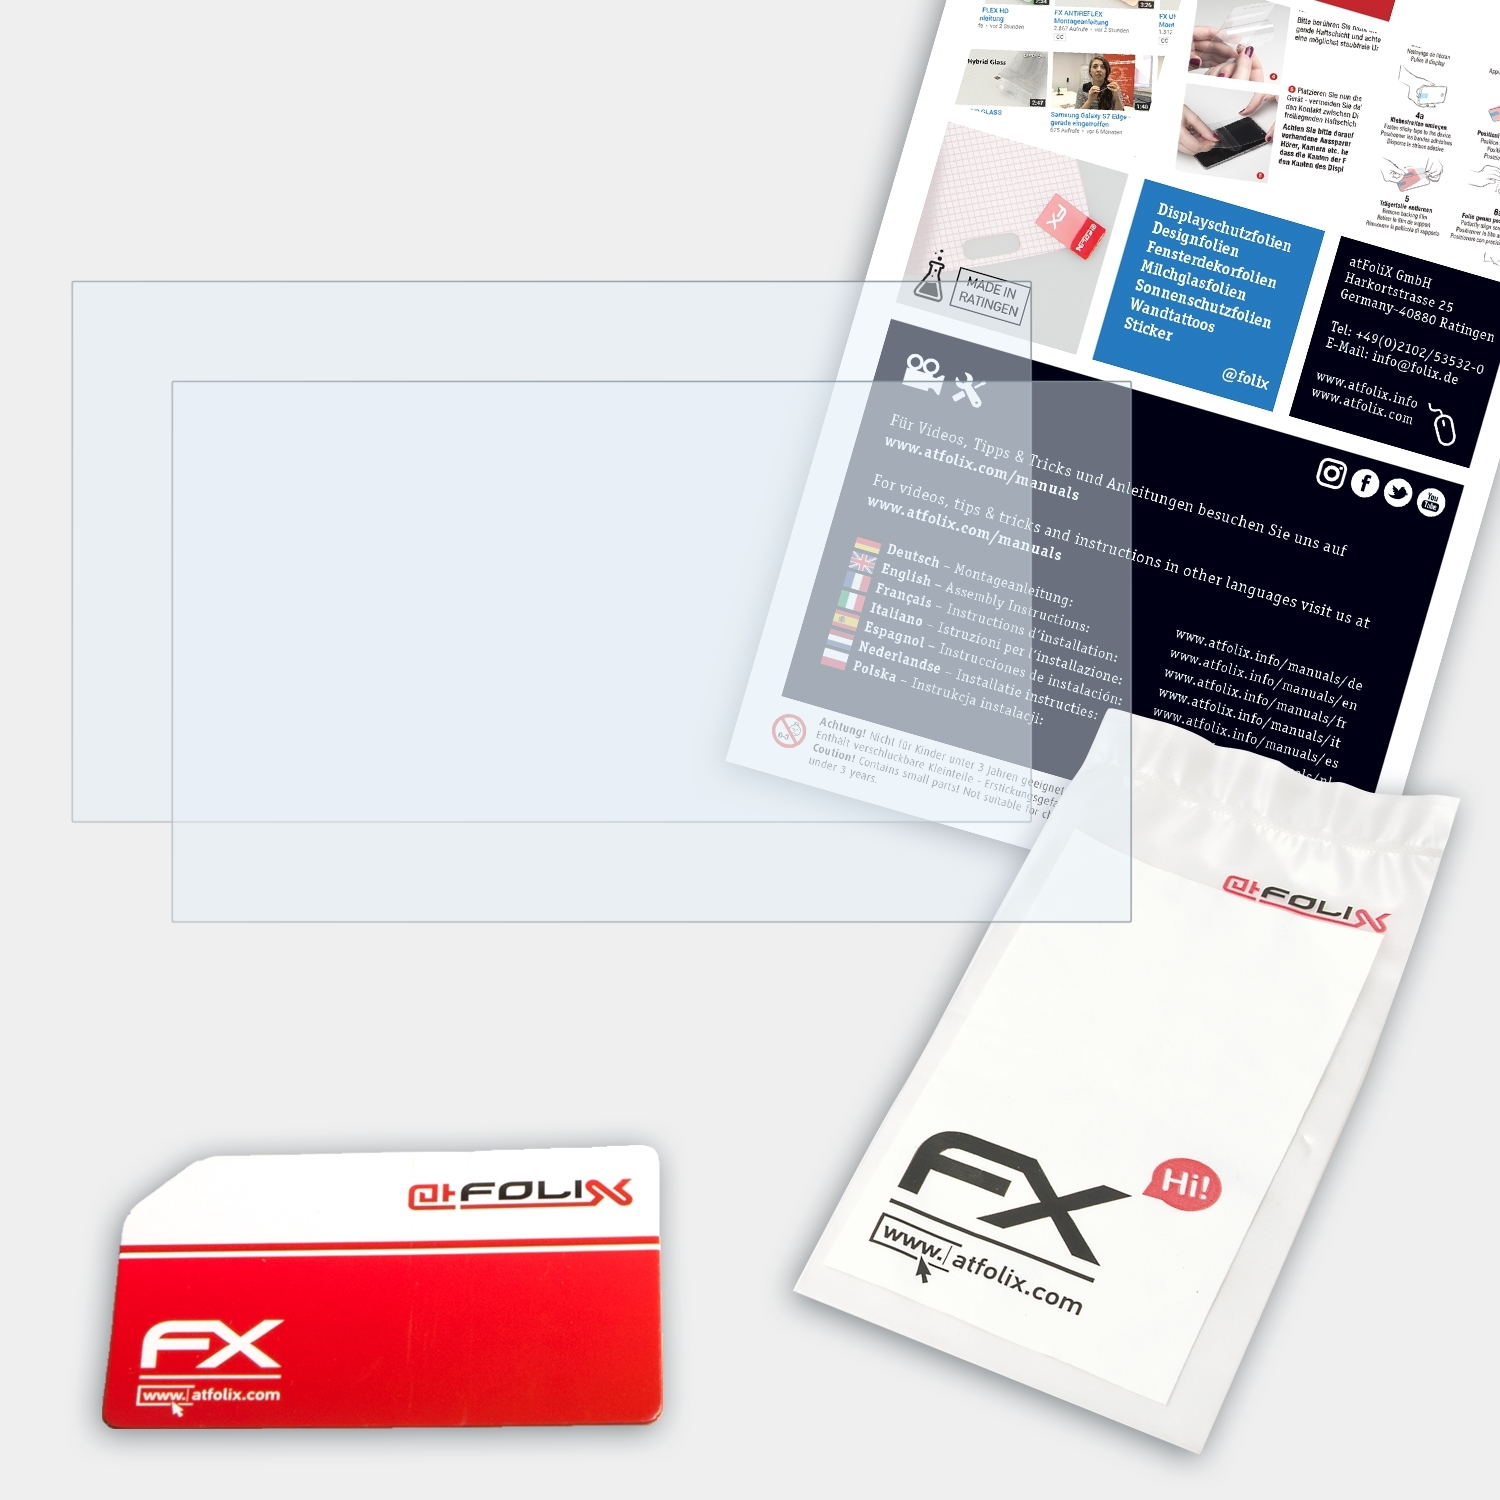 ATFOLIX 2x FX-Clear Displayschutz(für ThinkPad Lenovo L490)